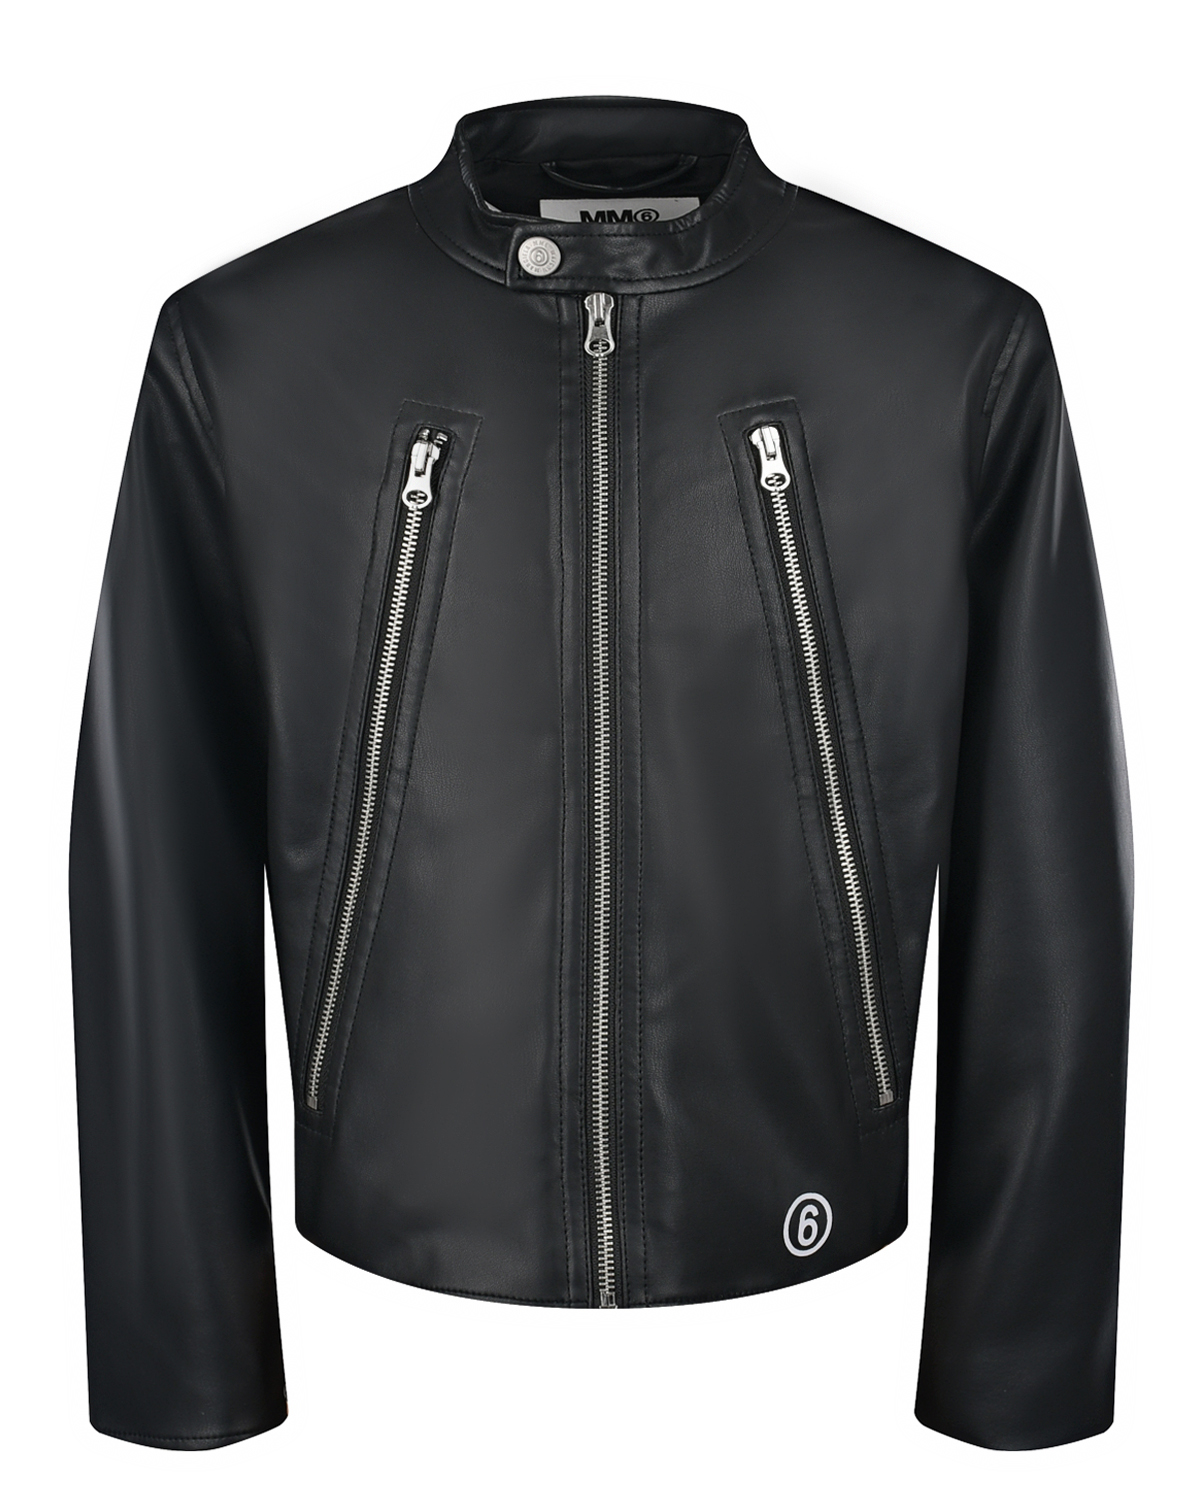 Черная куртка из эко-кожи MM6 Maison Margiela футболка базовая черная с лого mm6 maison margiela